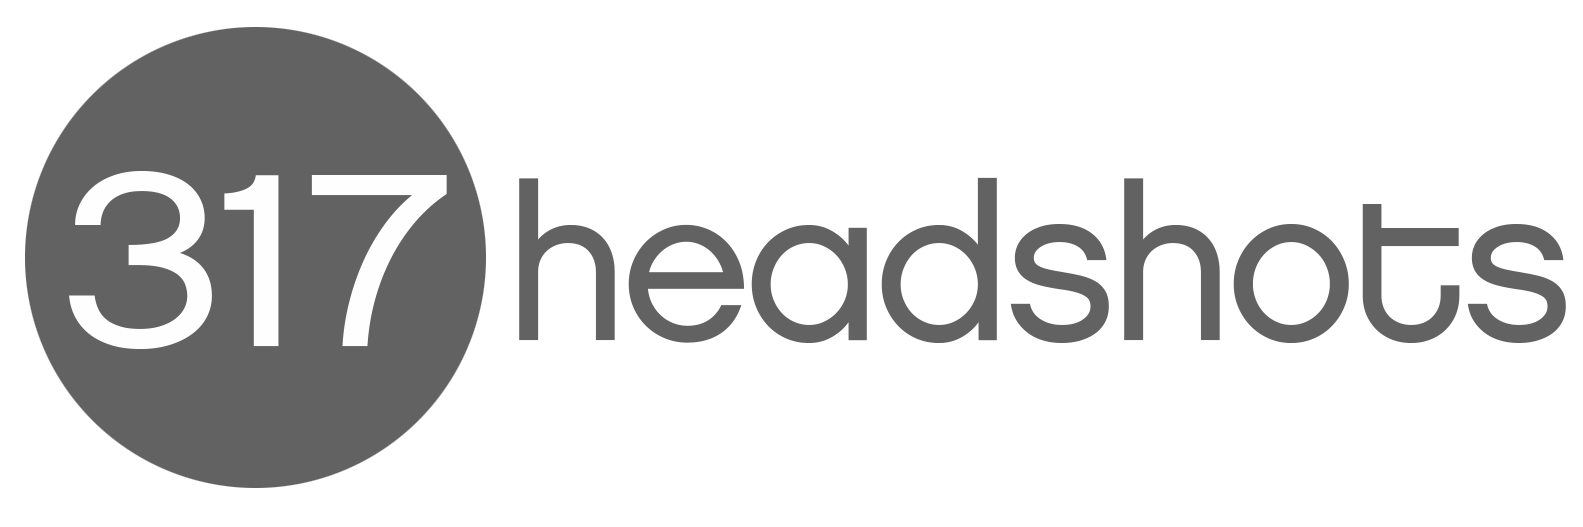 317headshots | Professional Headshots Indianapolis